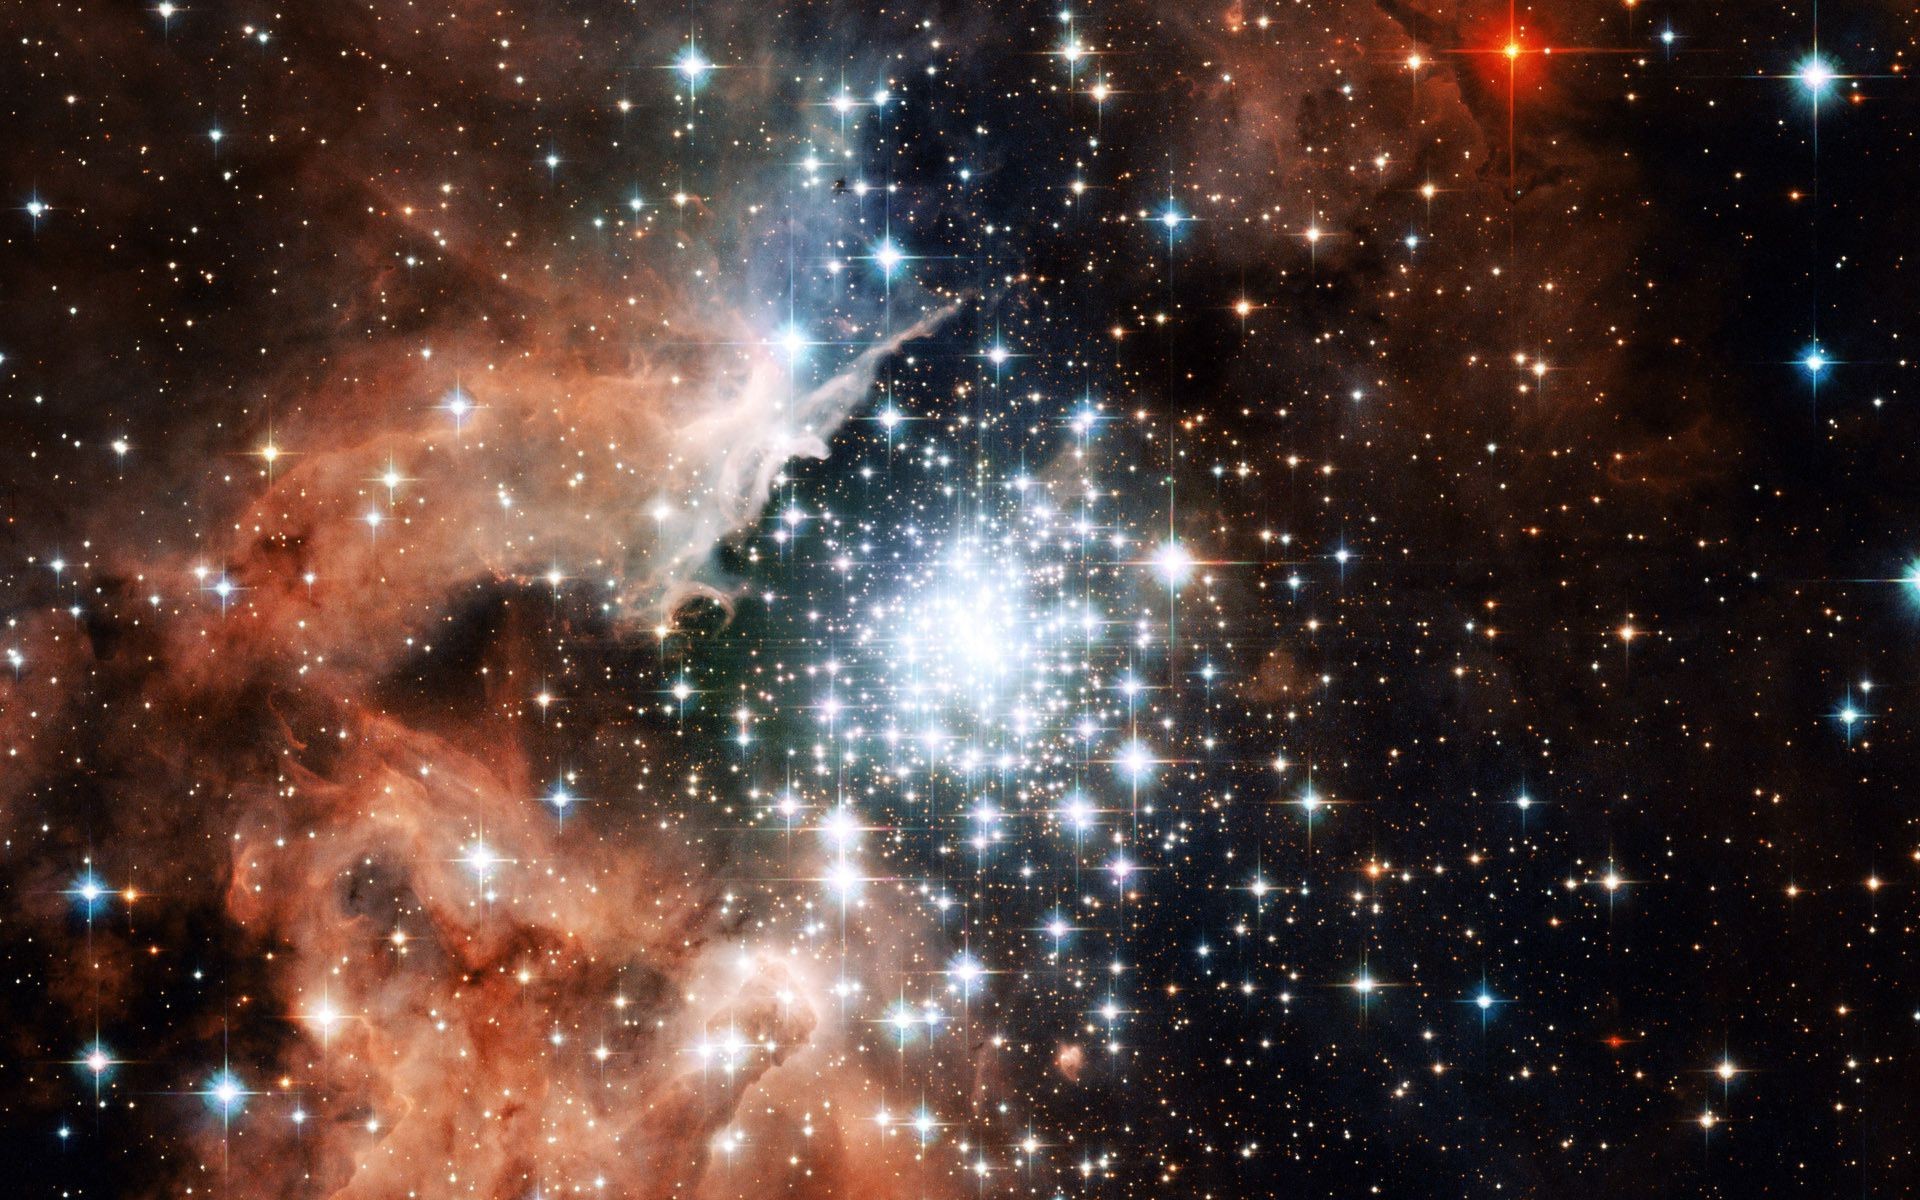 galaxy astronomy constellation nebula space dust stellar infinity astrology supernova cosmos planet exploration ball-shaped deep plasma science shining dark mystery